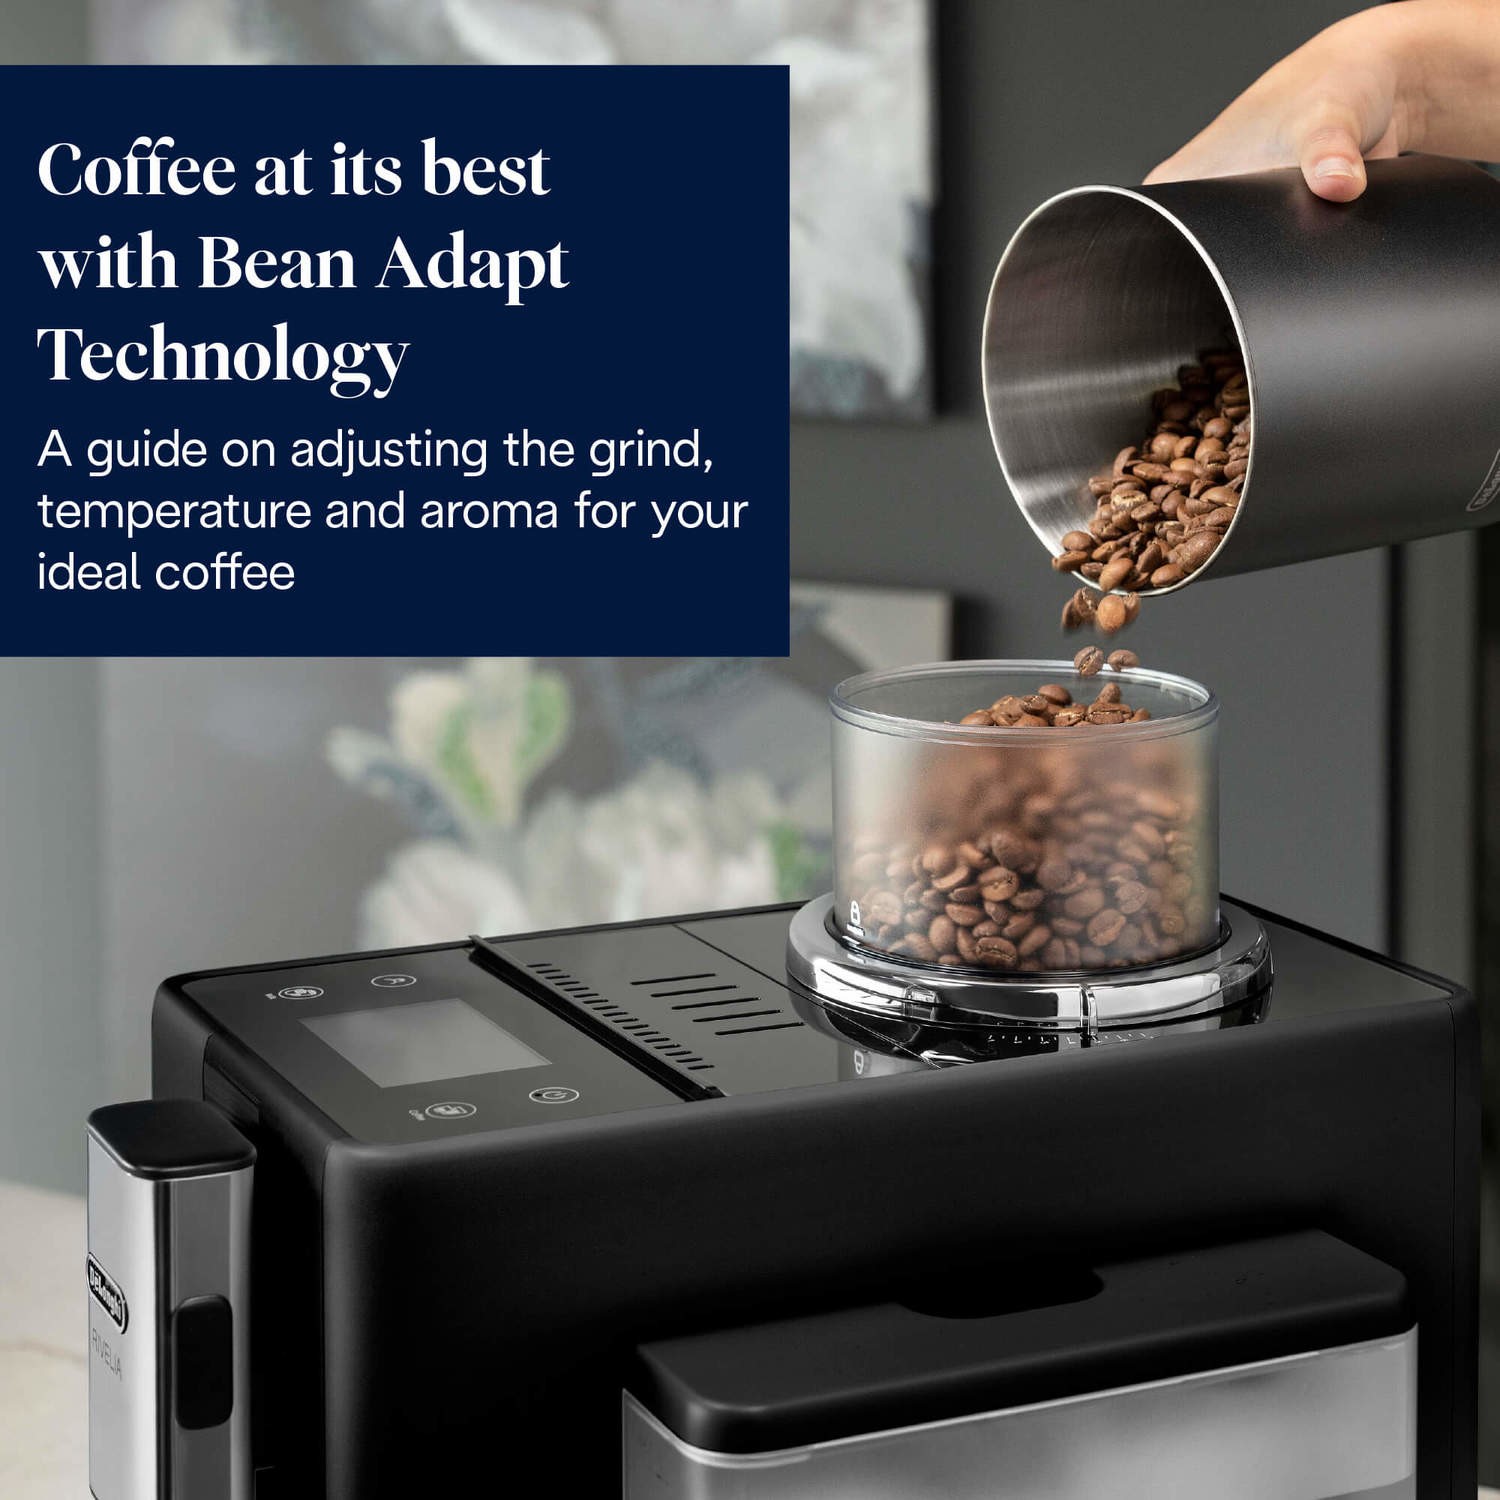 DELONGHI Rivelia EXAM440.55.G Bean to Cup Coffee Machine - Grey